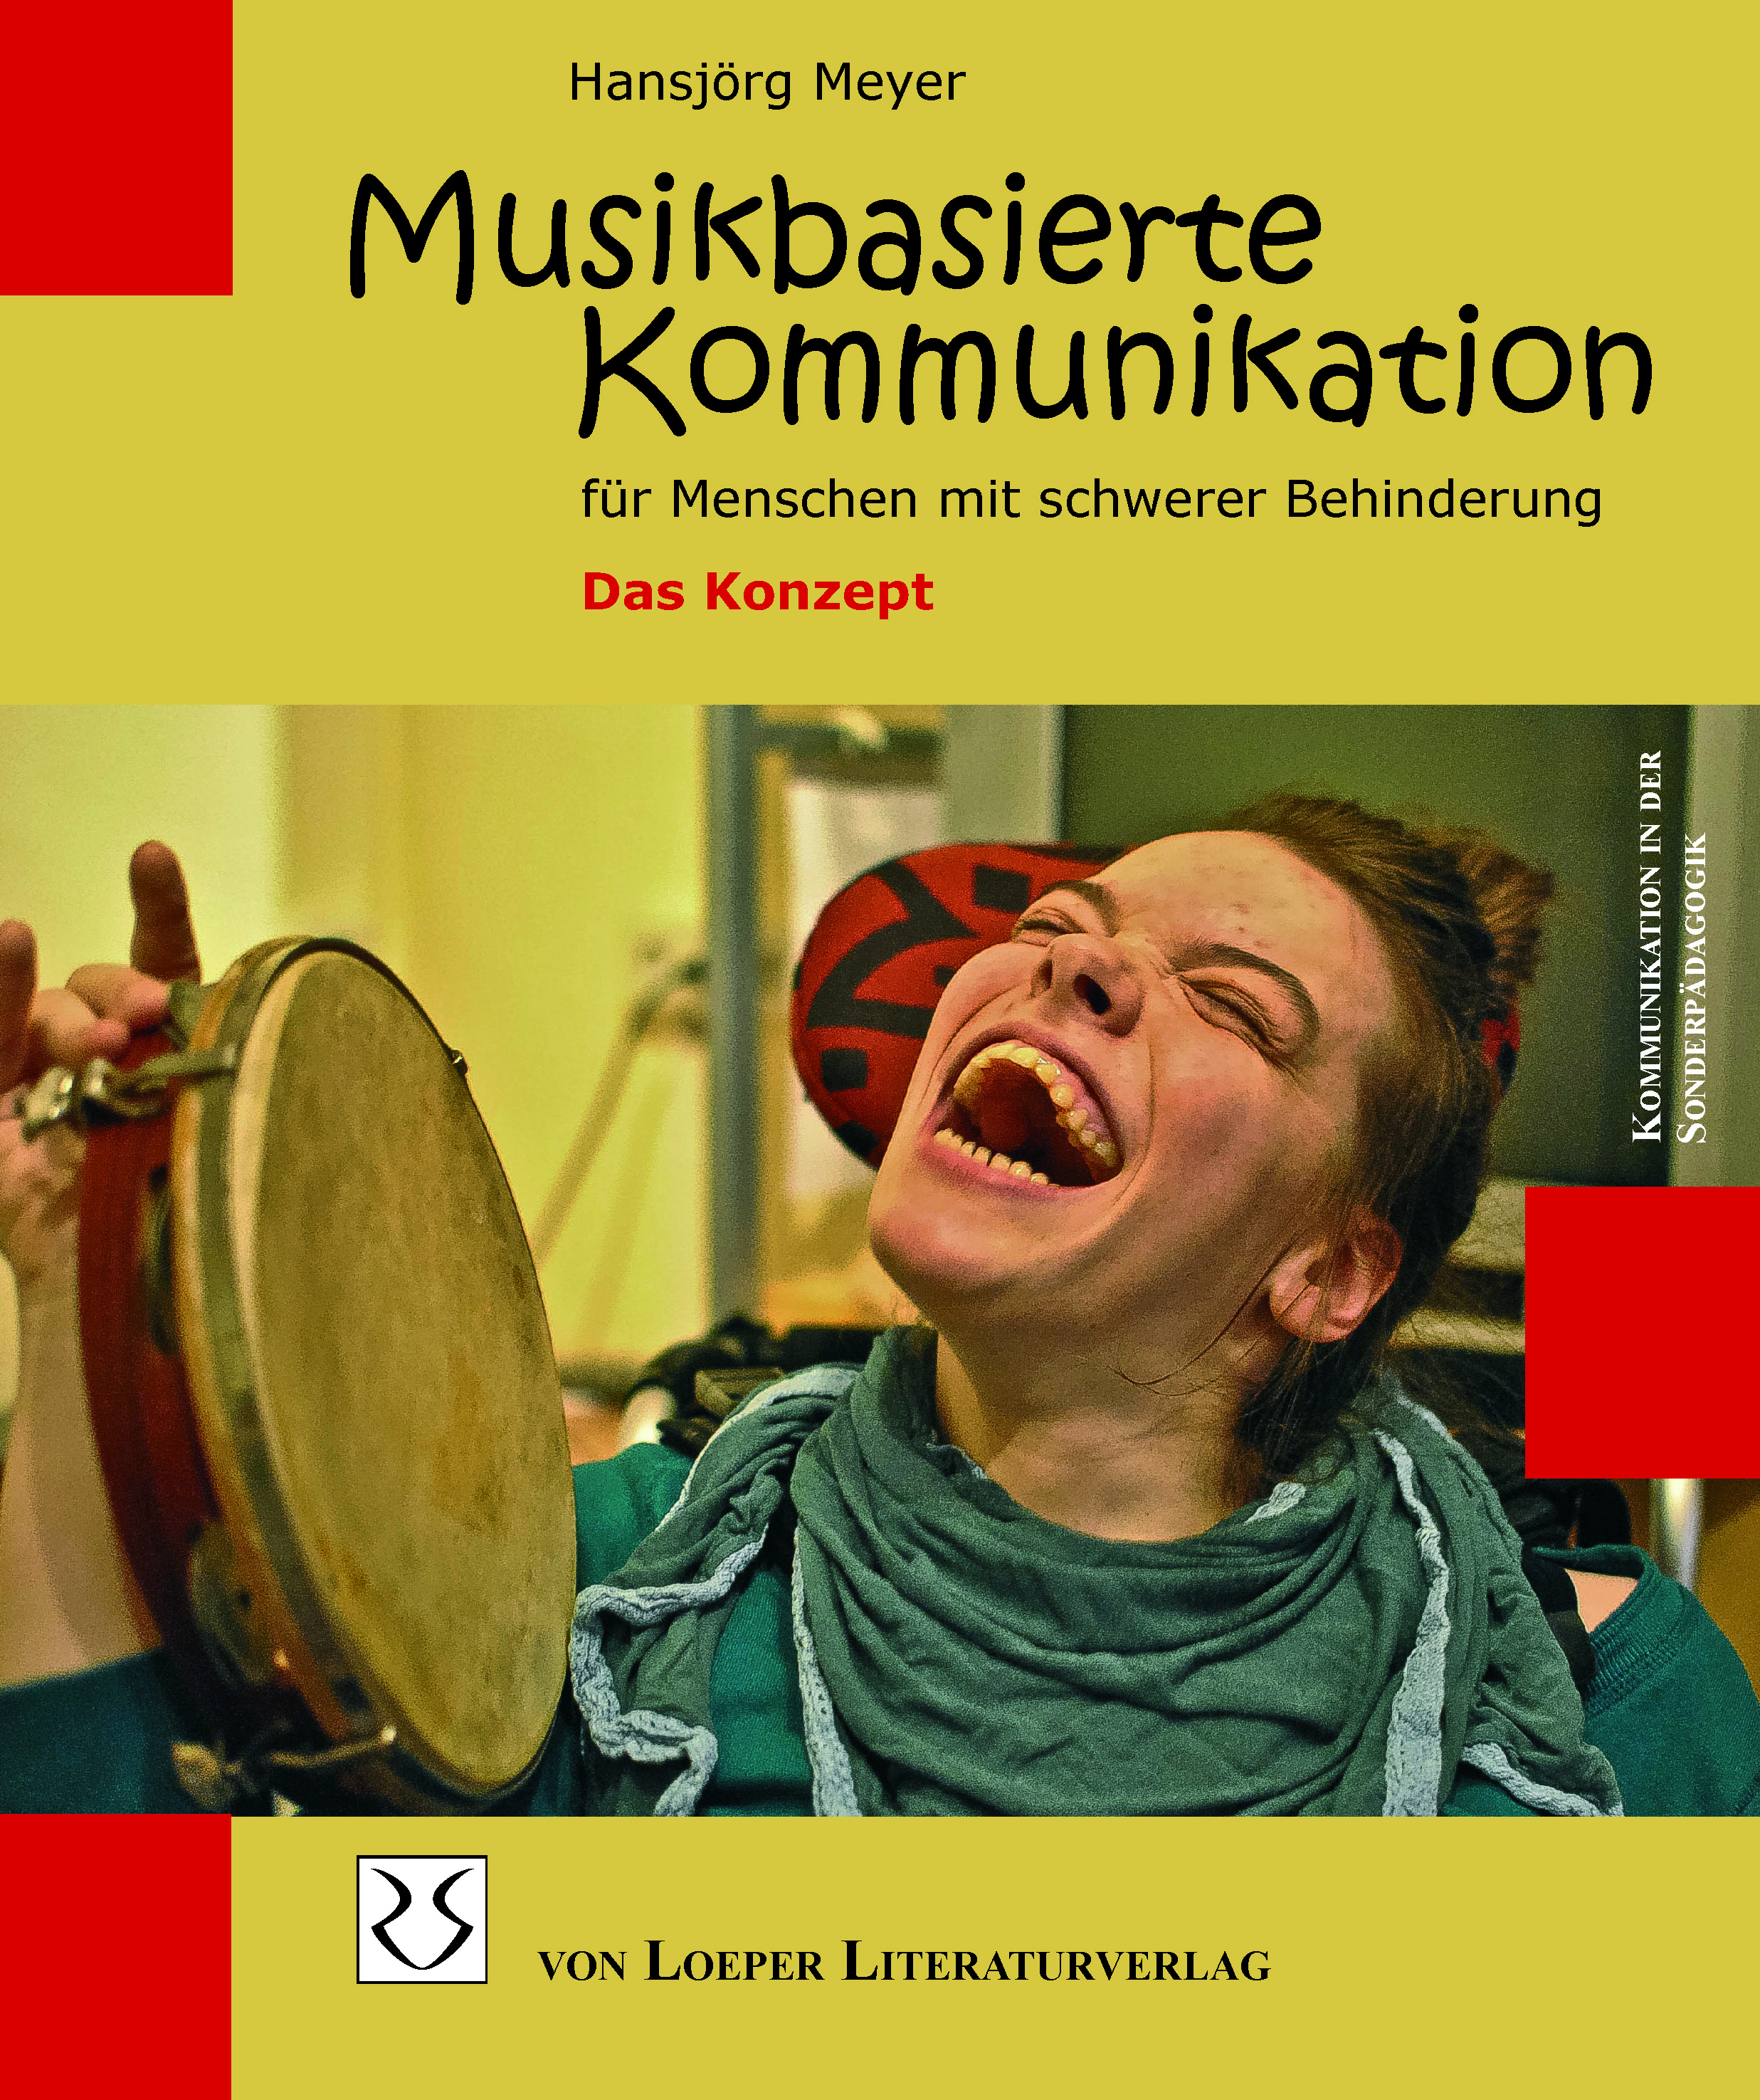 Buch "Musikbasierte Kommunikation"